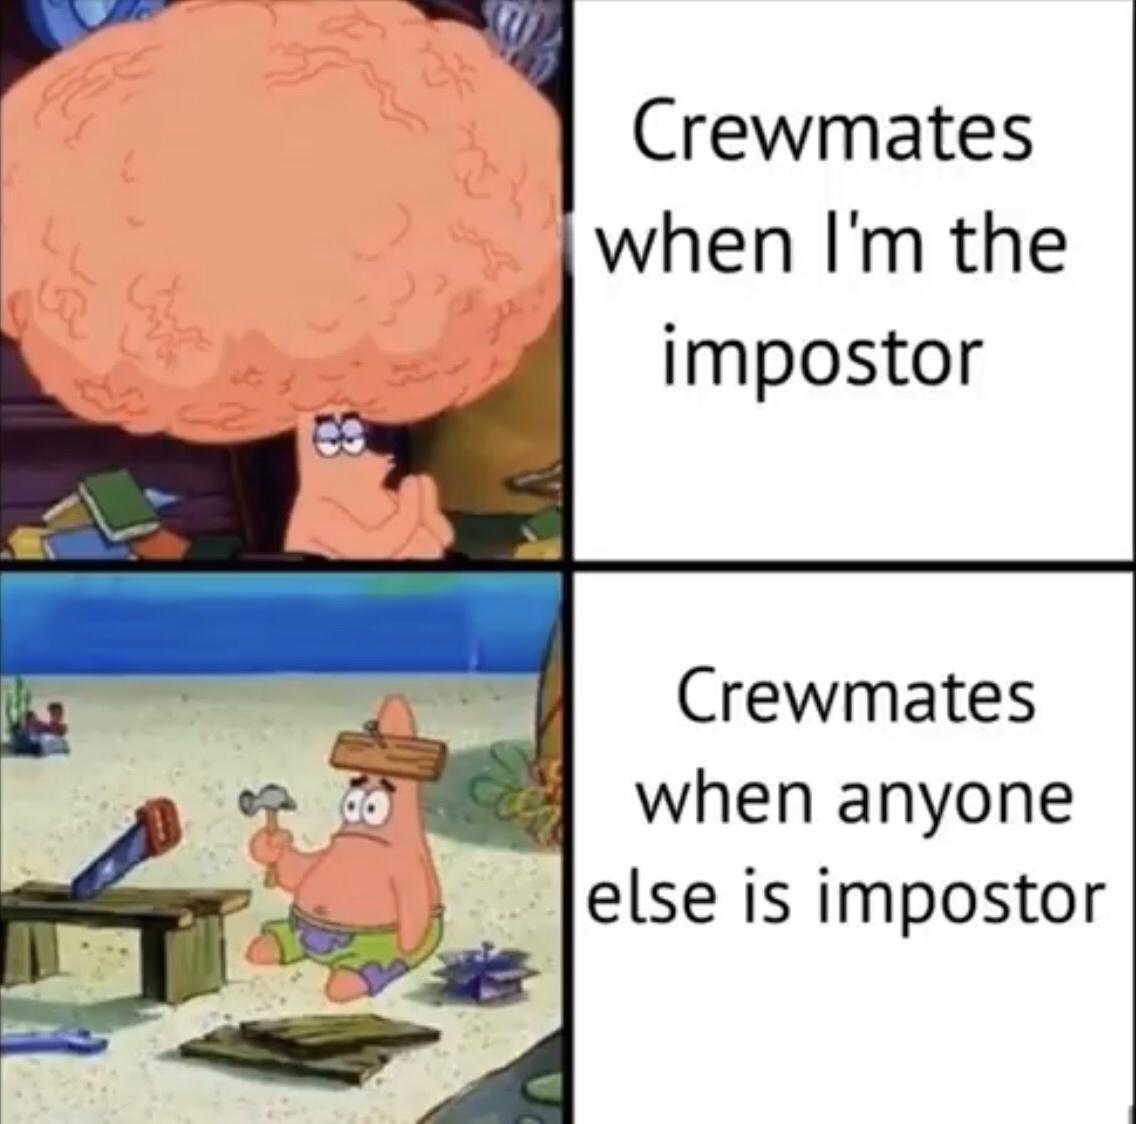 patrick big brain meme template - Crewmates when I'm the impostor Crewmates when anyone else is impostor